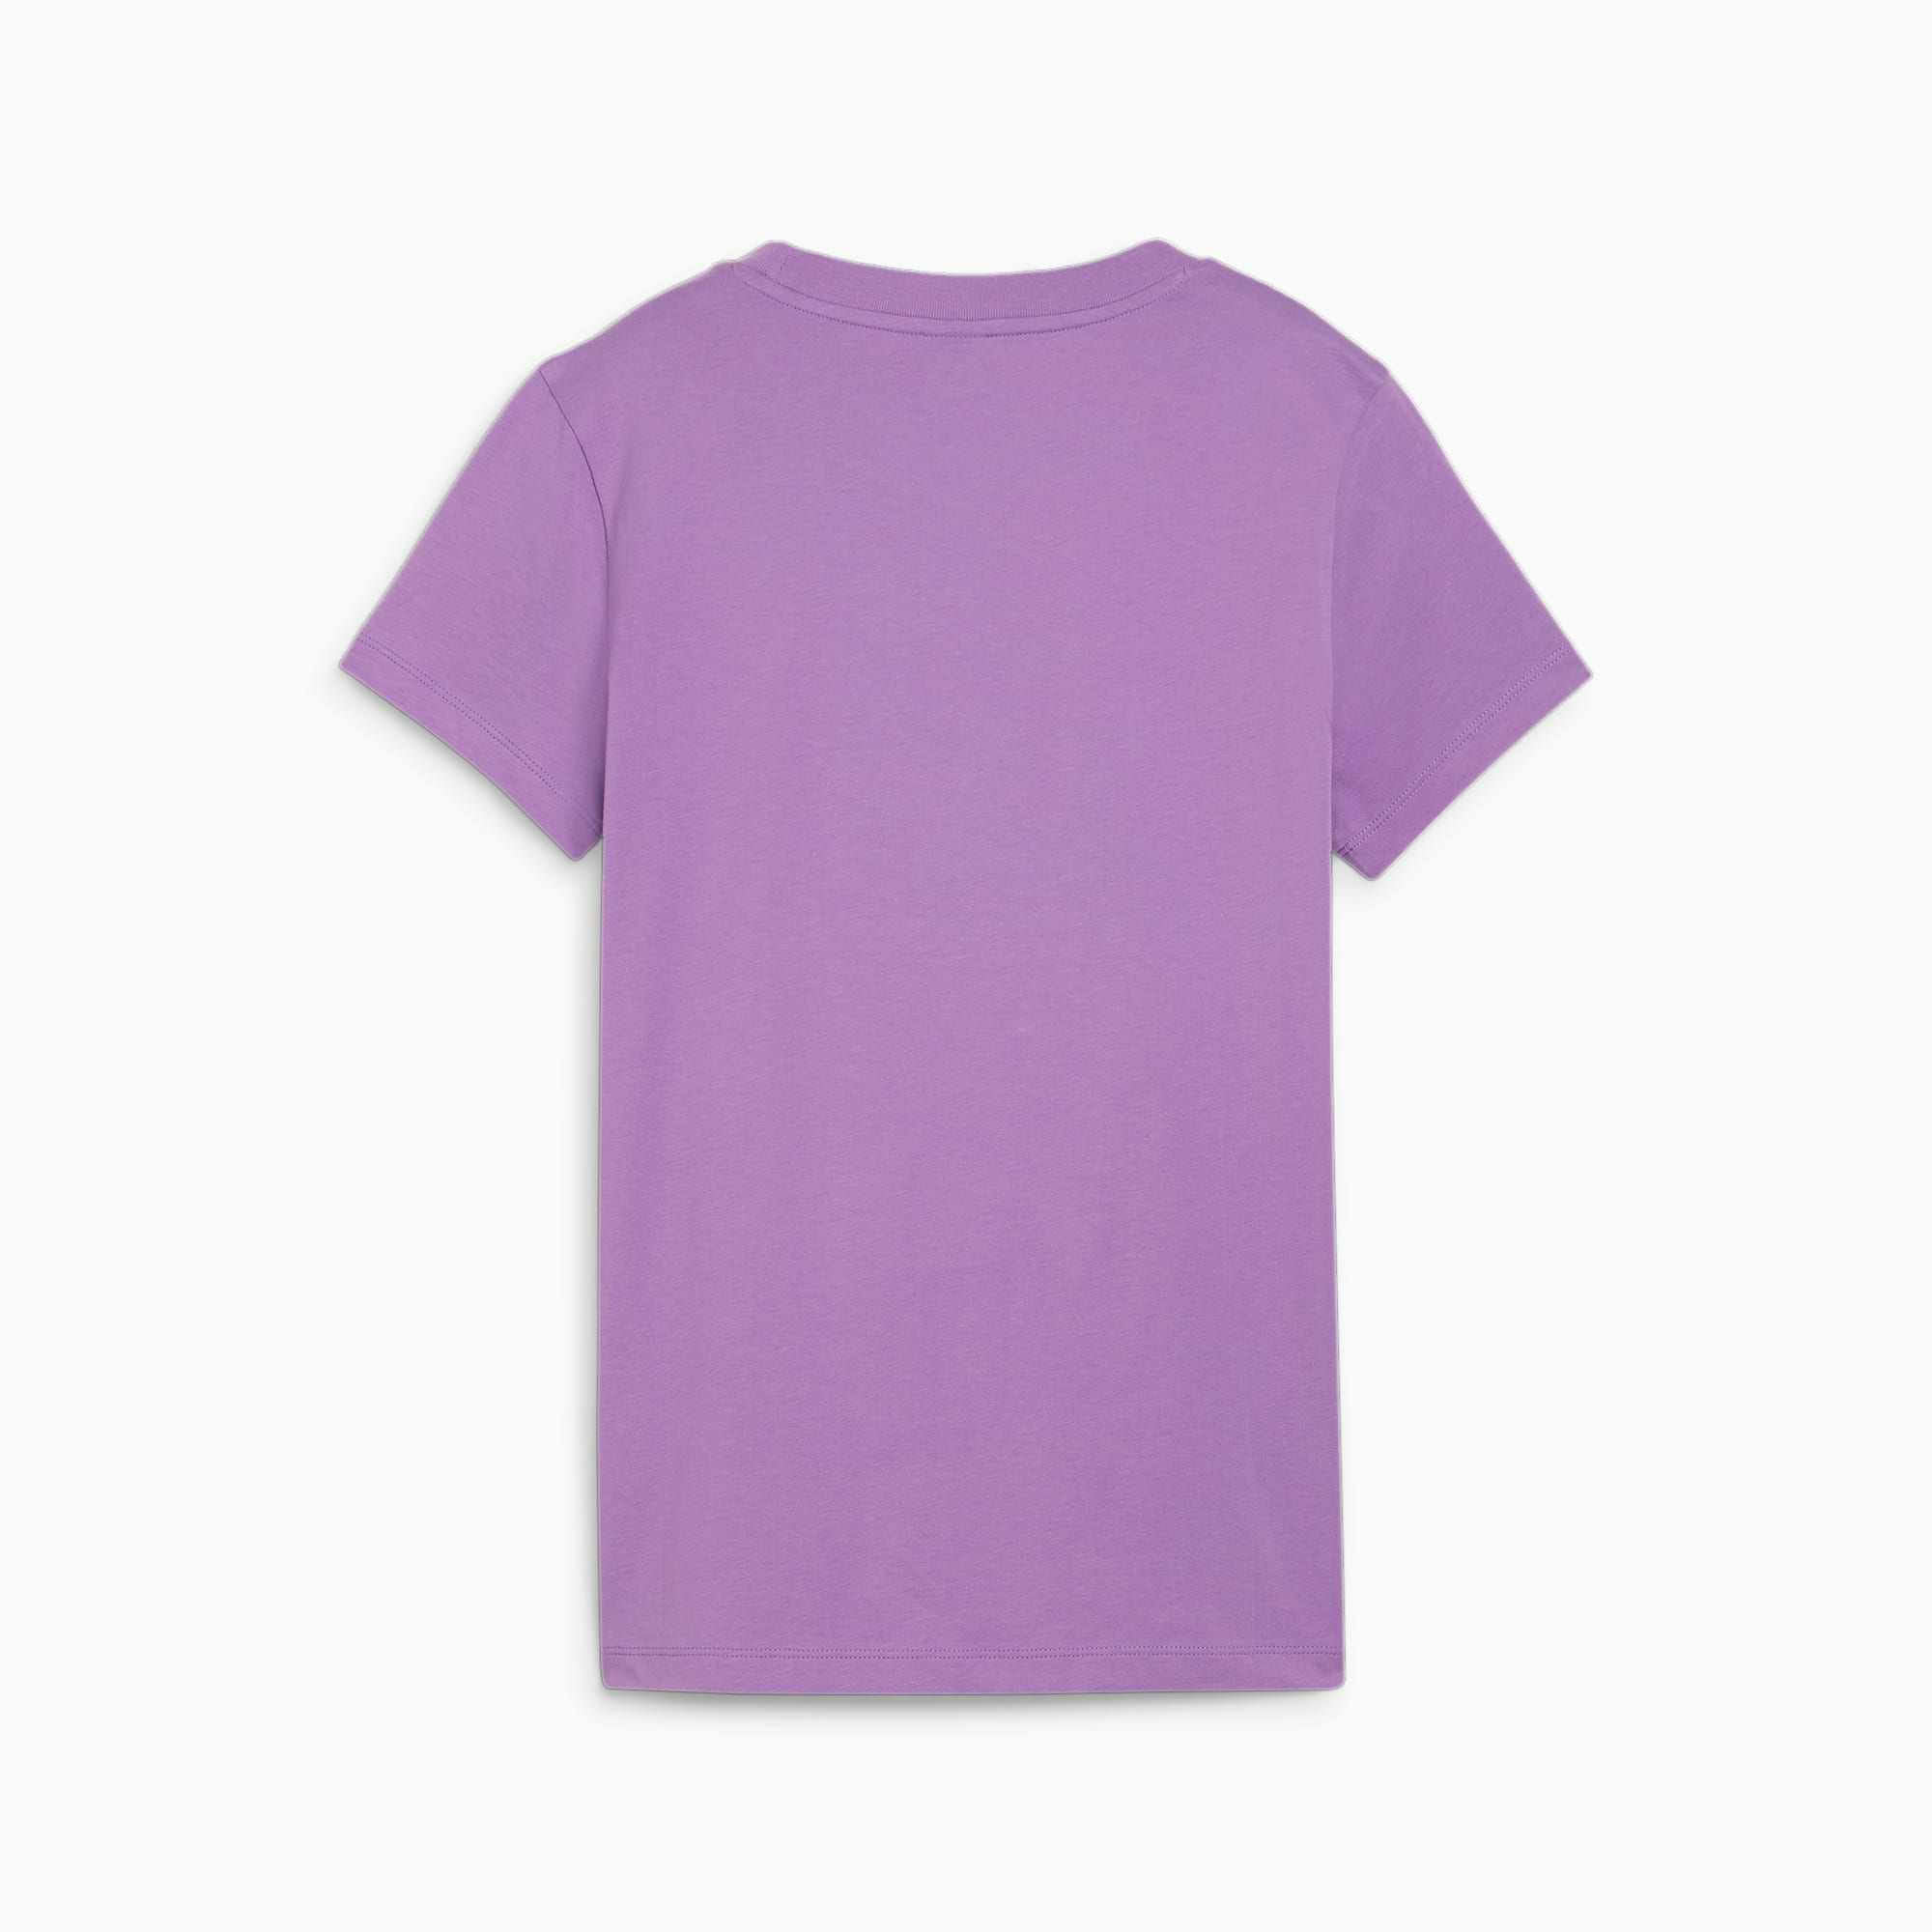 PUMA Classics Shiny Logo Women's T-Shirt, Ultraviolet, Size M, Clothing